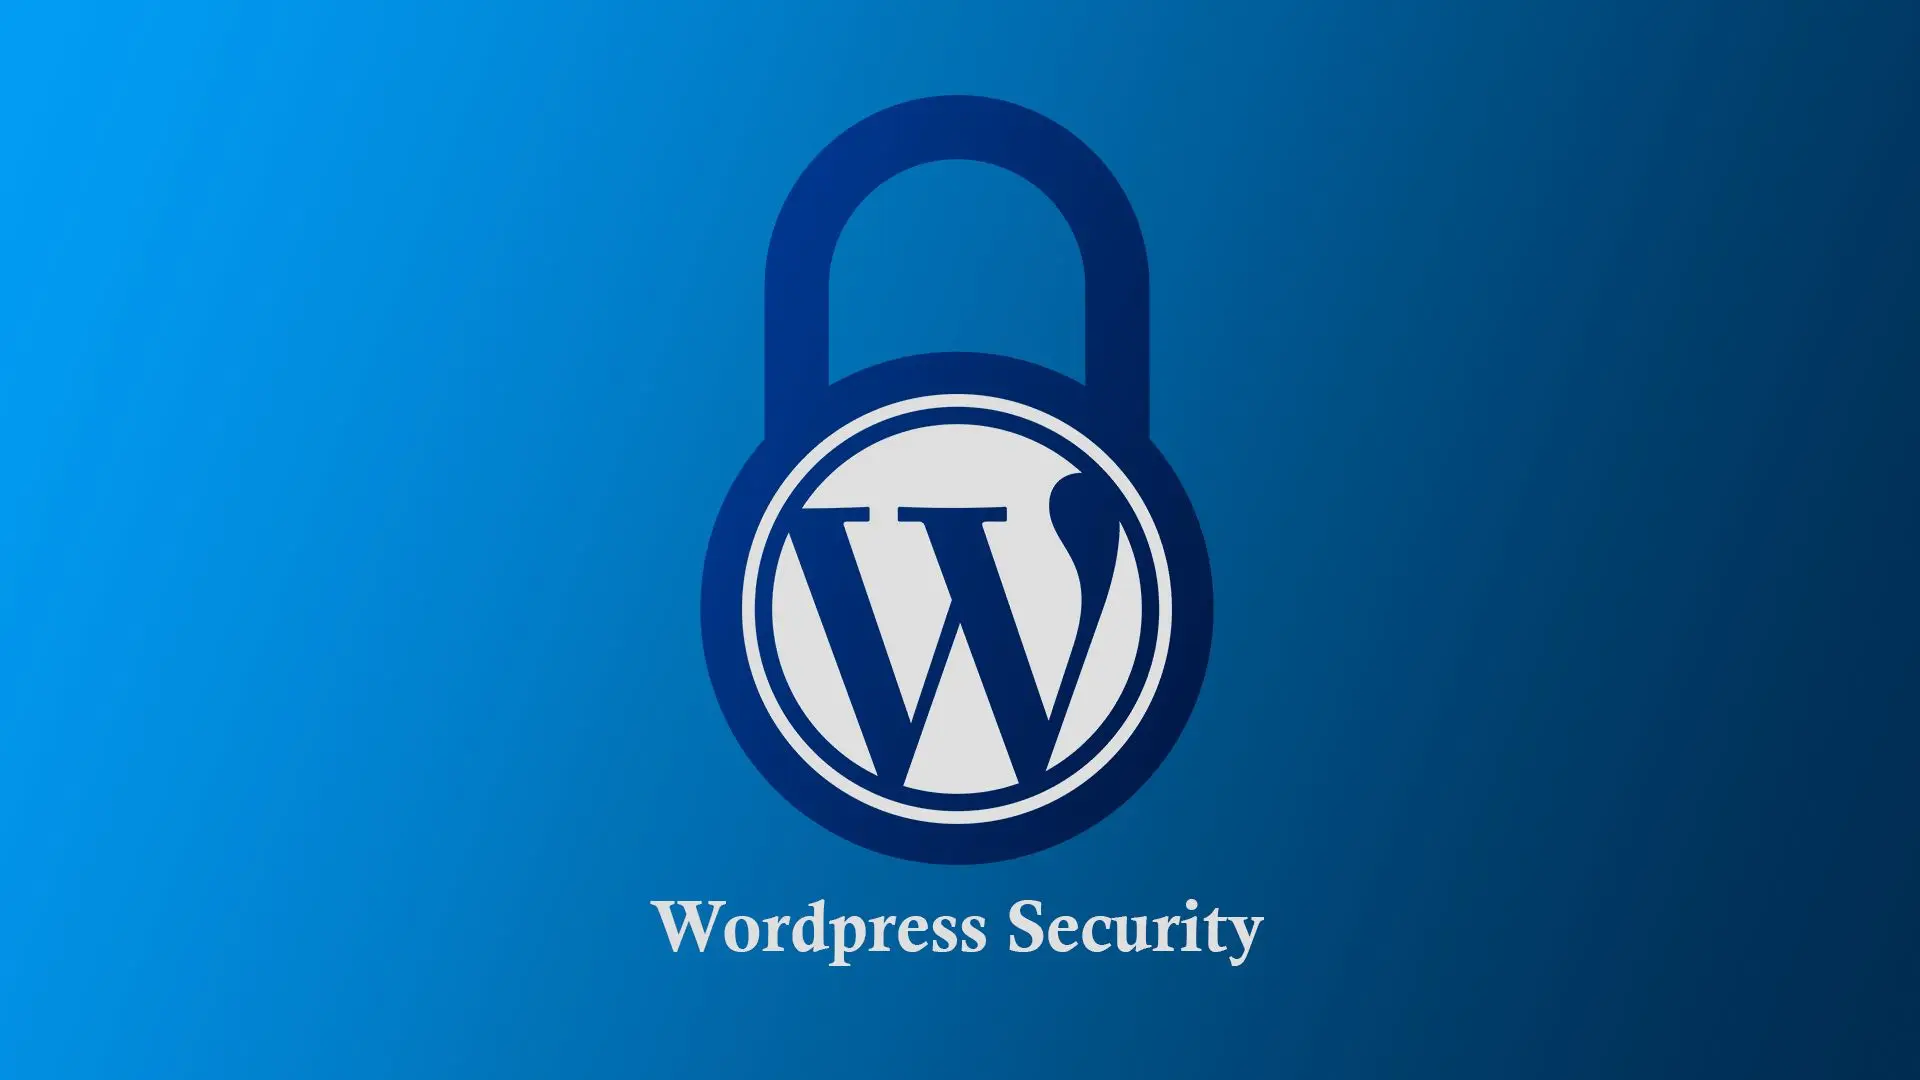 WordPress Security Plugins